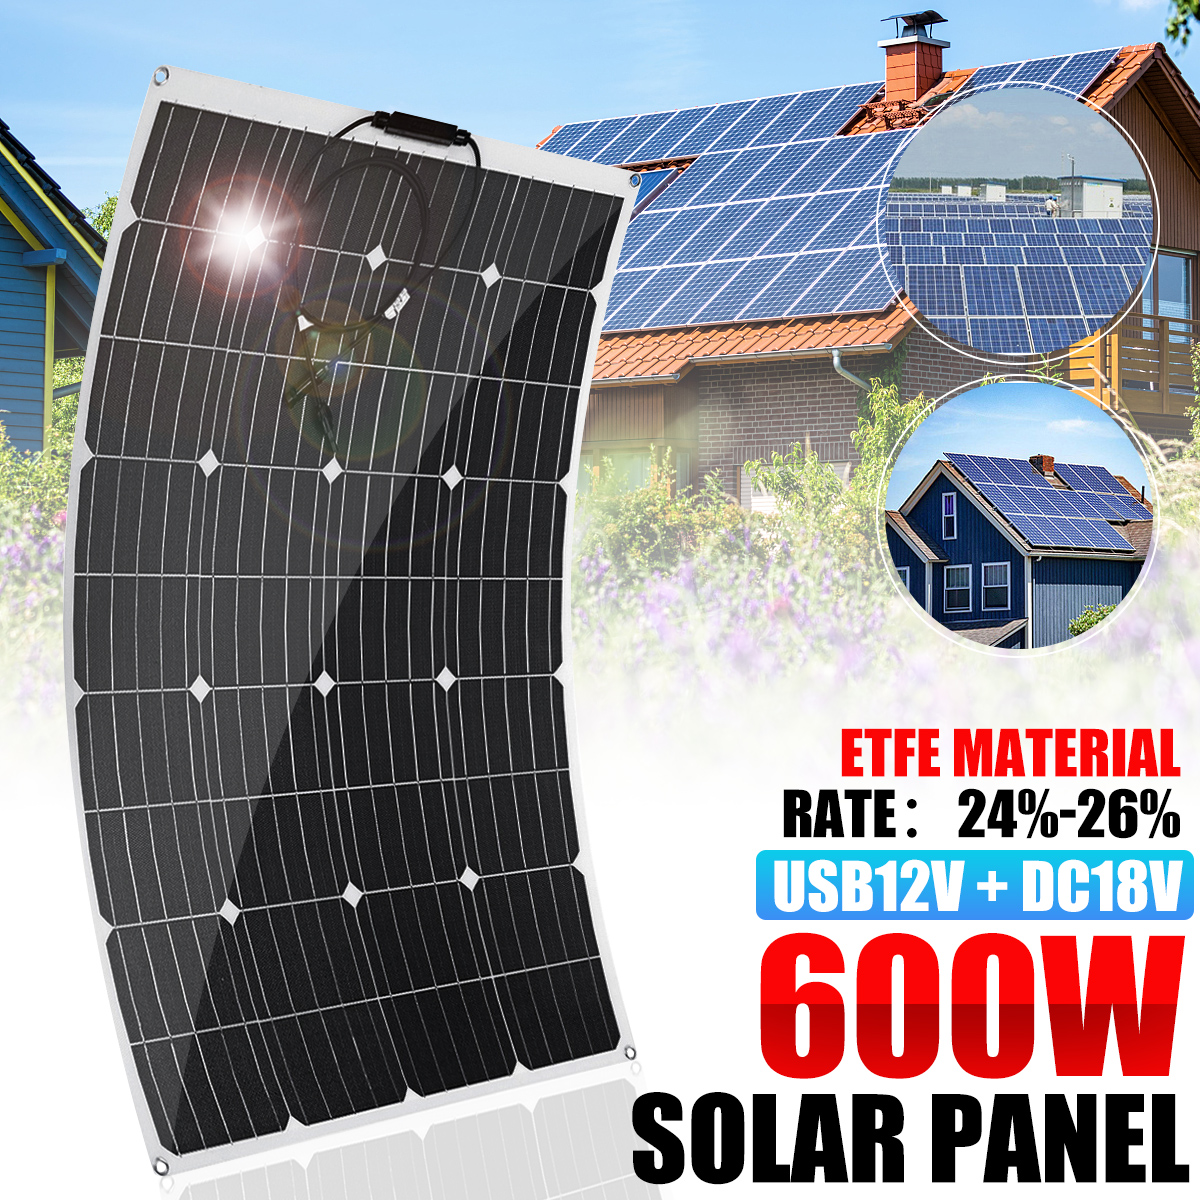 100W-18V-ETFE-Sunpower-Mono-Solar-Panel-Battery-Charger-Home-Outdoor-Caravan-Boat-Car-1879341-4